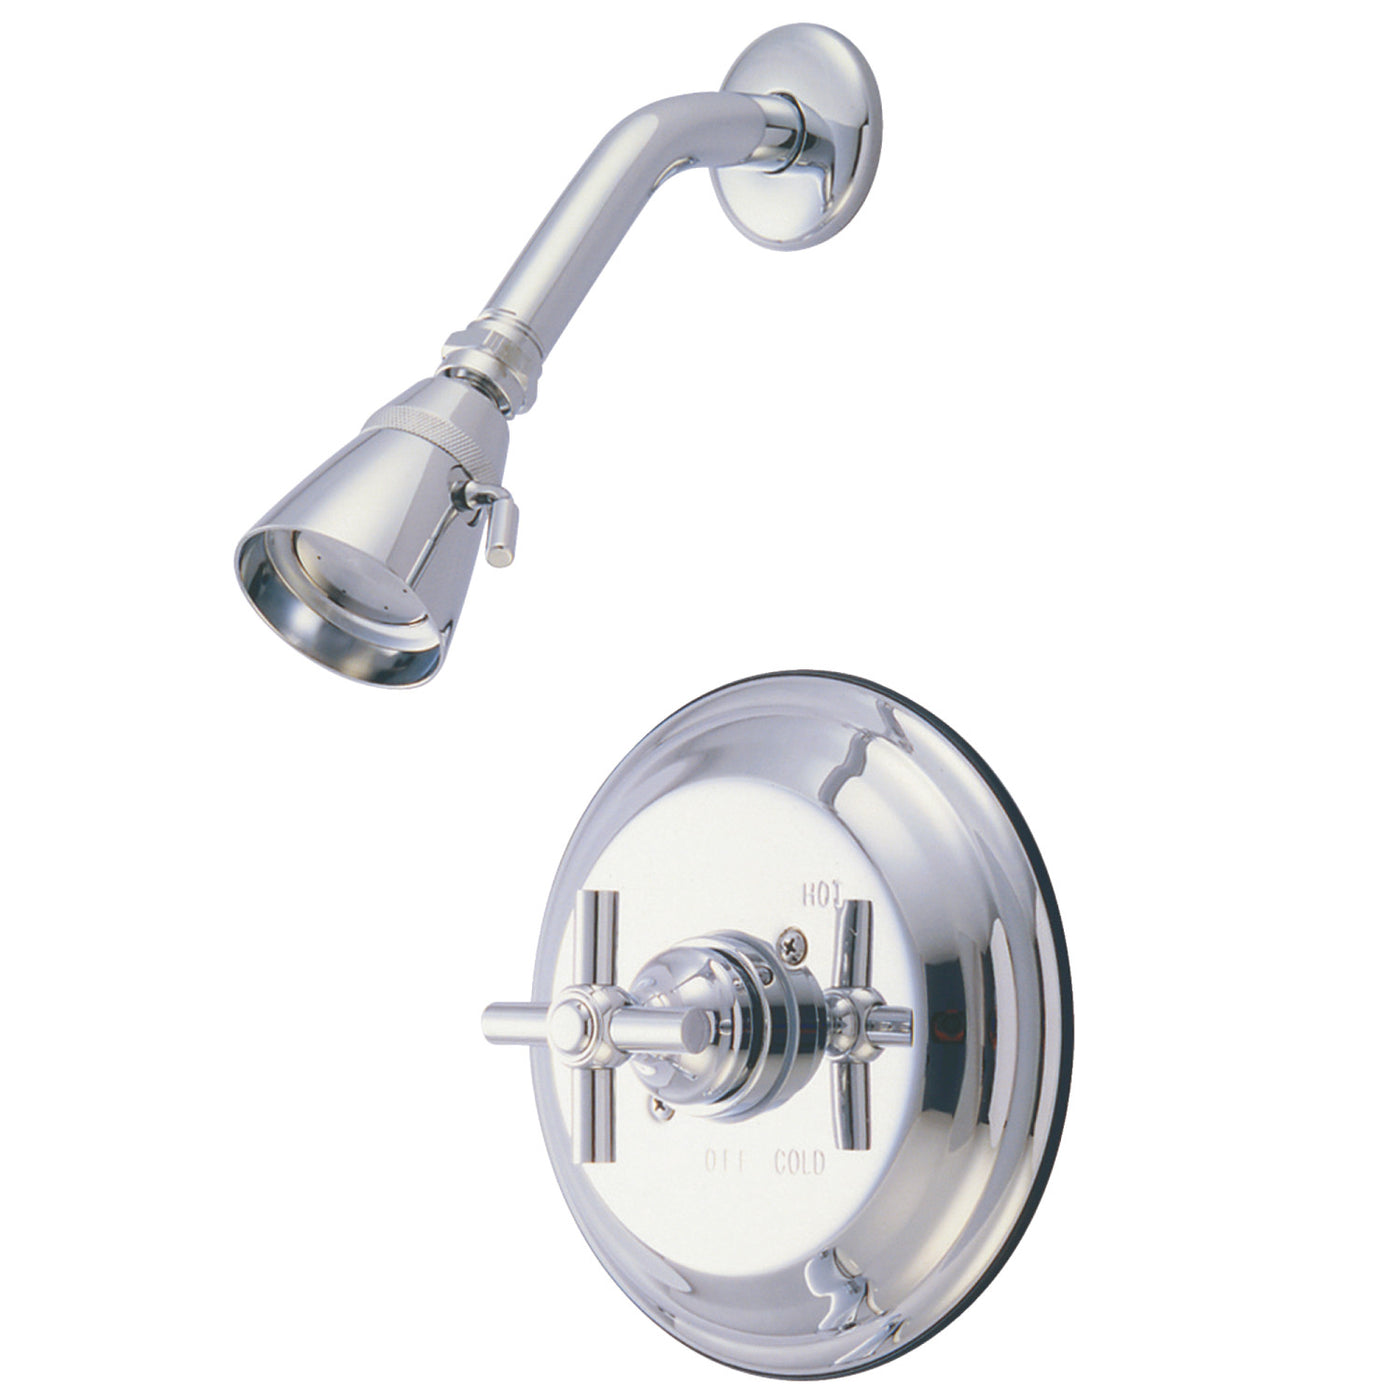 Elements of Design EB2631EXSO Shower Faucet, Polished Chrome